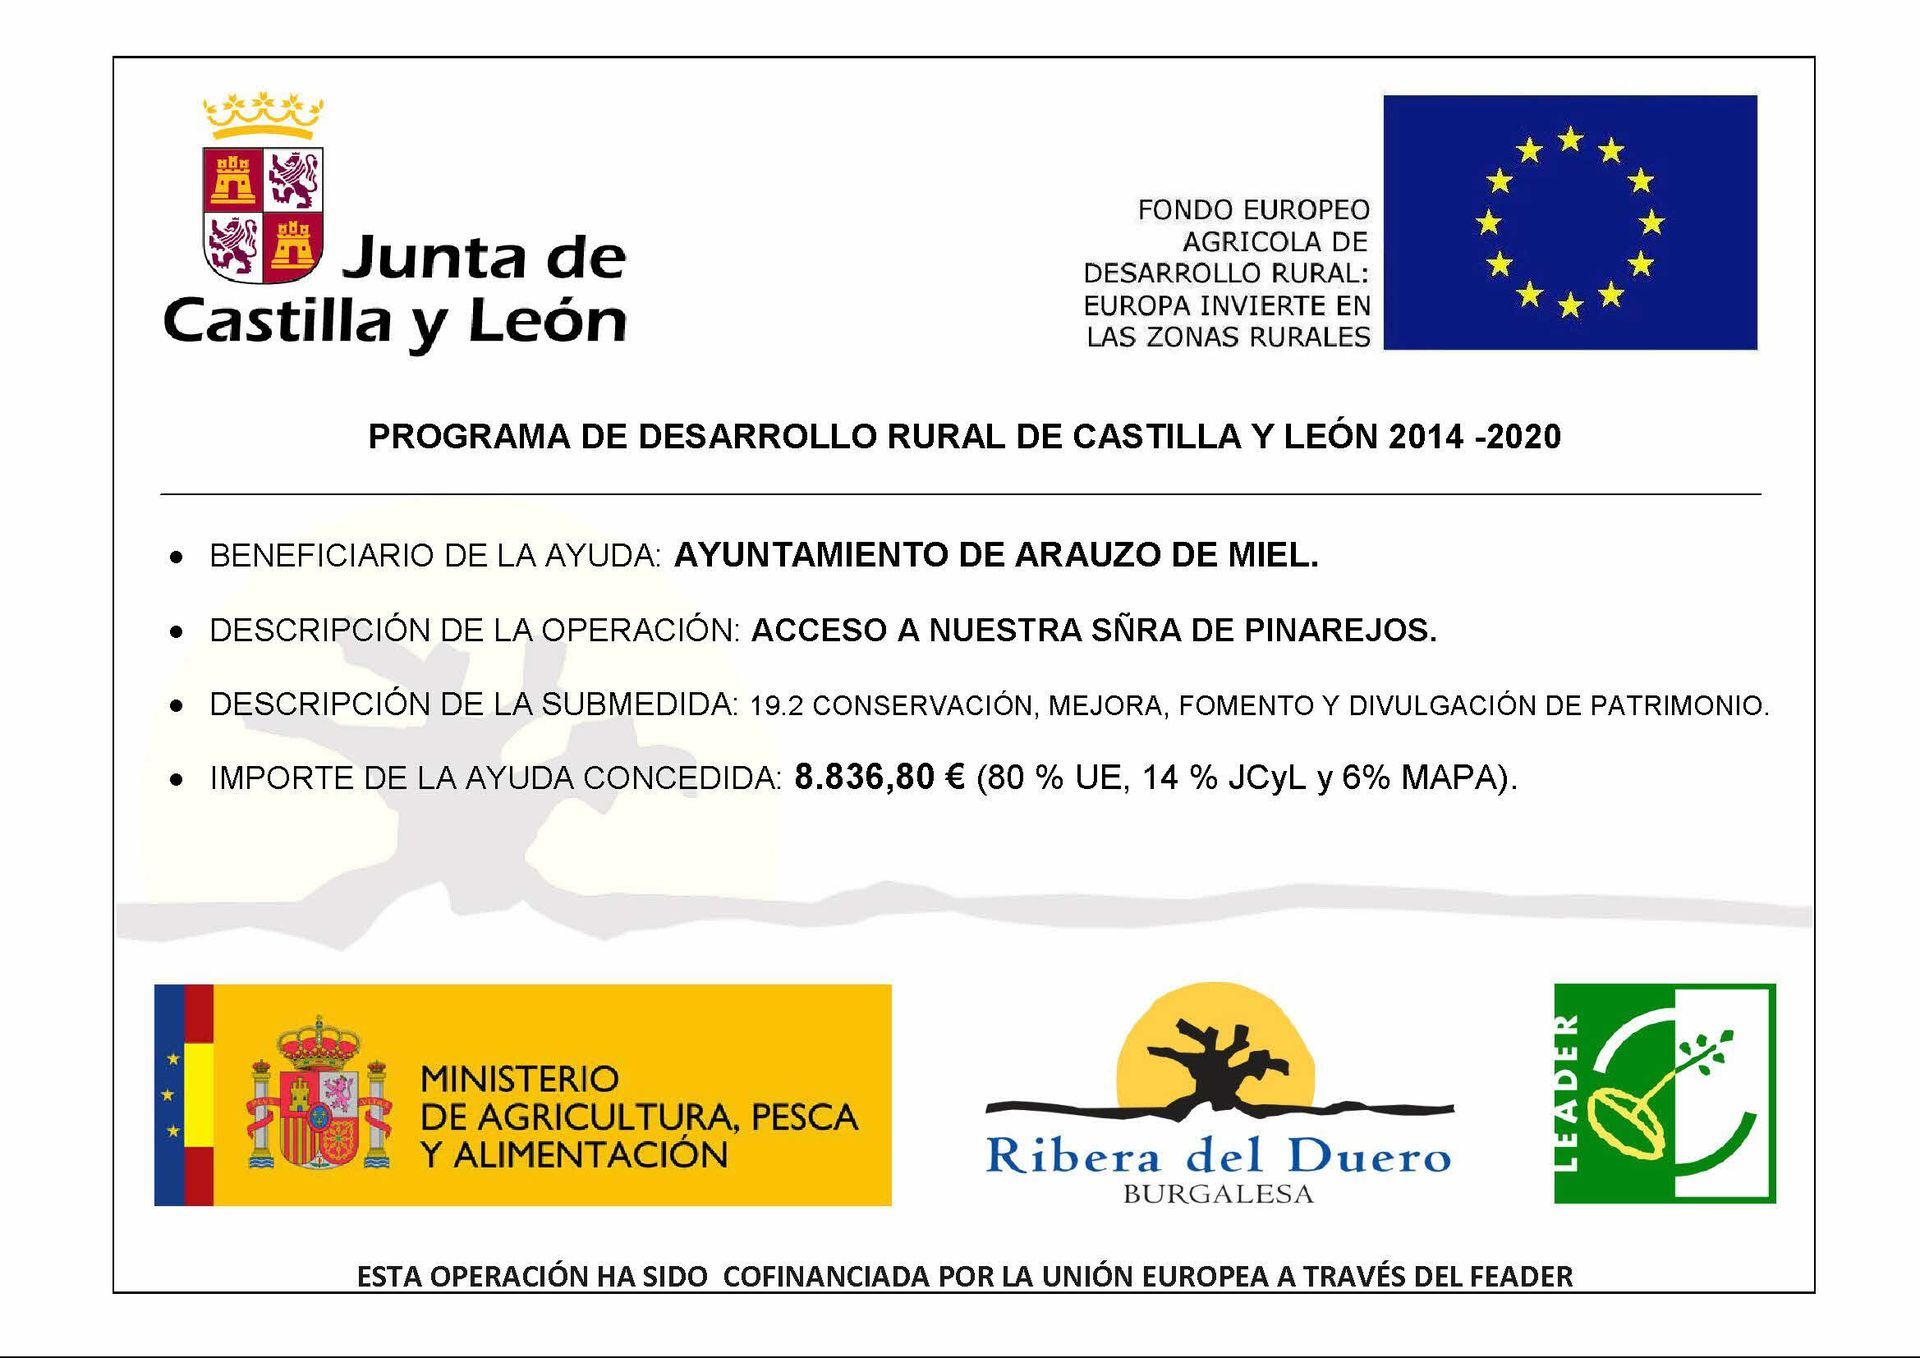 Ayuda LEADER 2014-2020. A.D.R.I. Ribera del Duero Burgalesa: